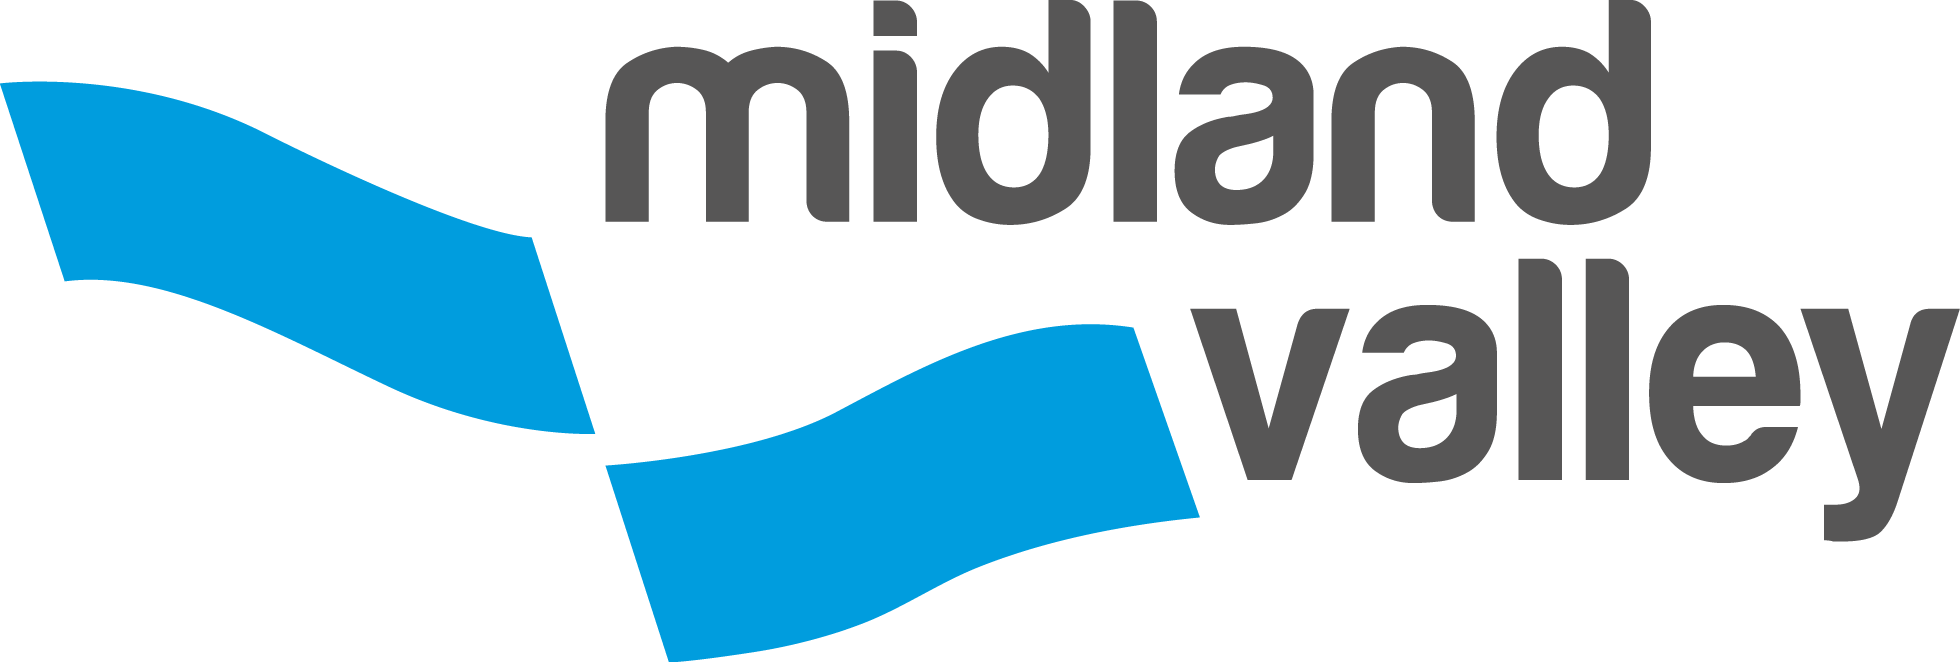 Mv Stacked Logo Without Strapline Cmyk Transparent - Midland Valley (1960x662)